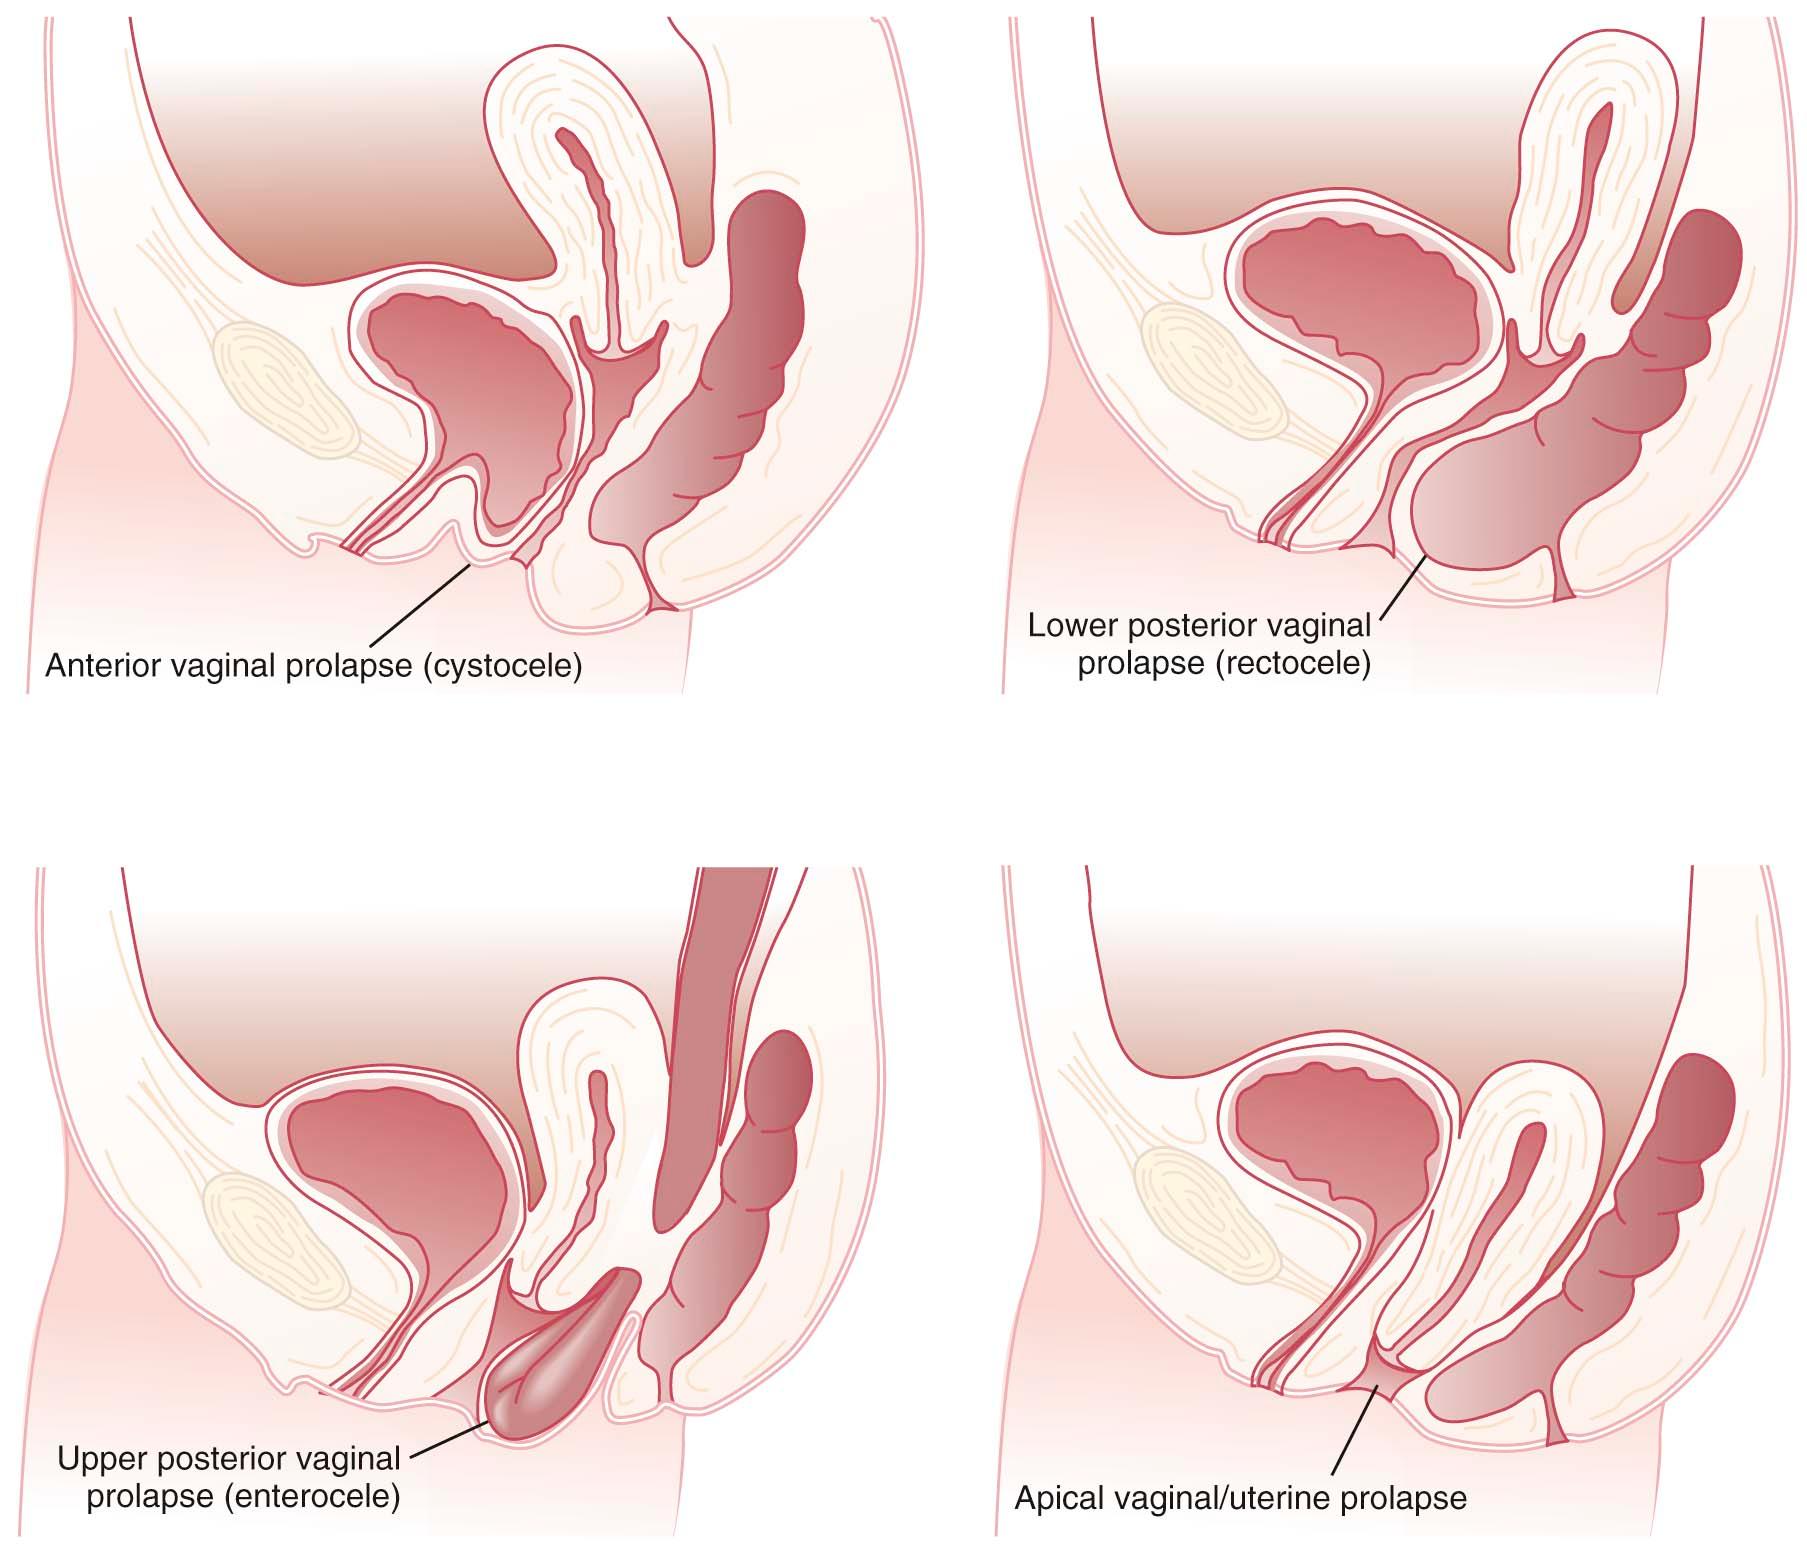 FIGURE 23-1, Diagrammatic representation of the four types of vaginal uterine prolapse.